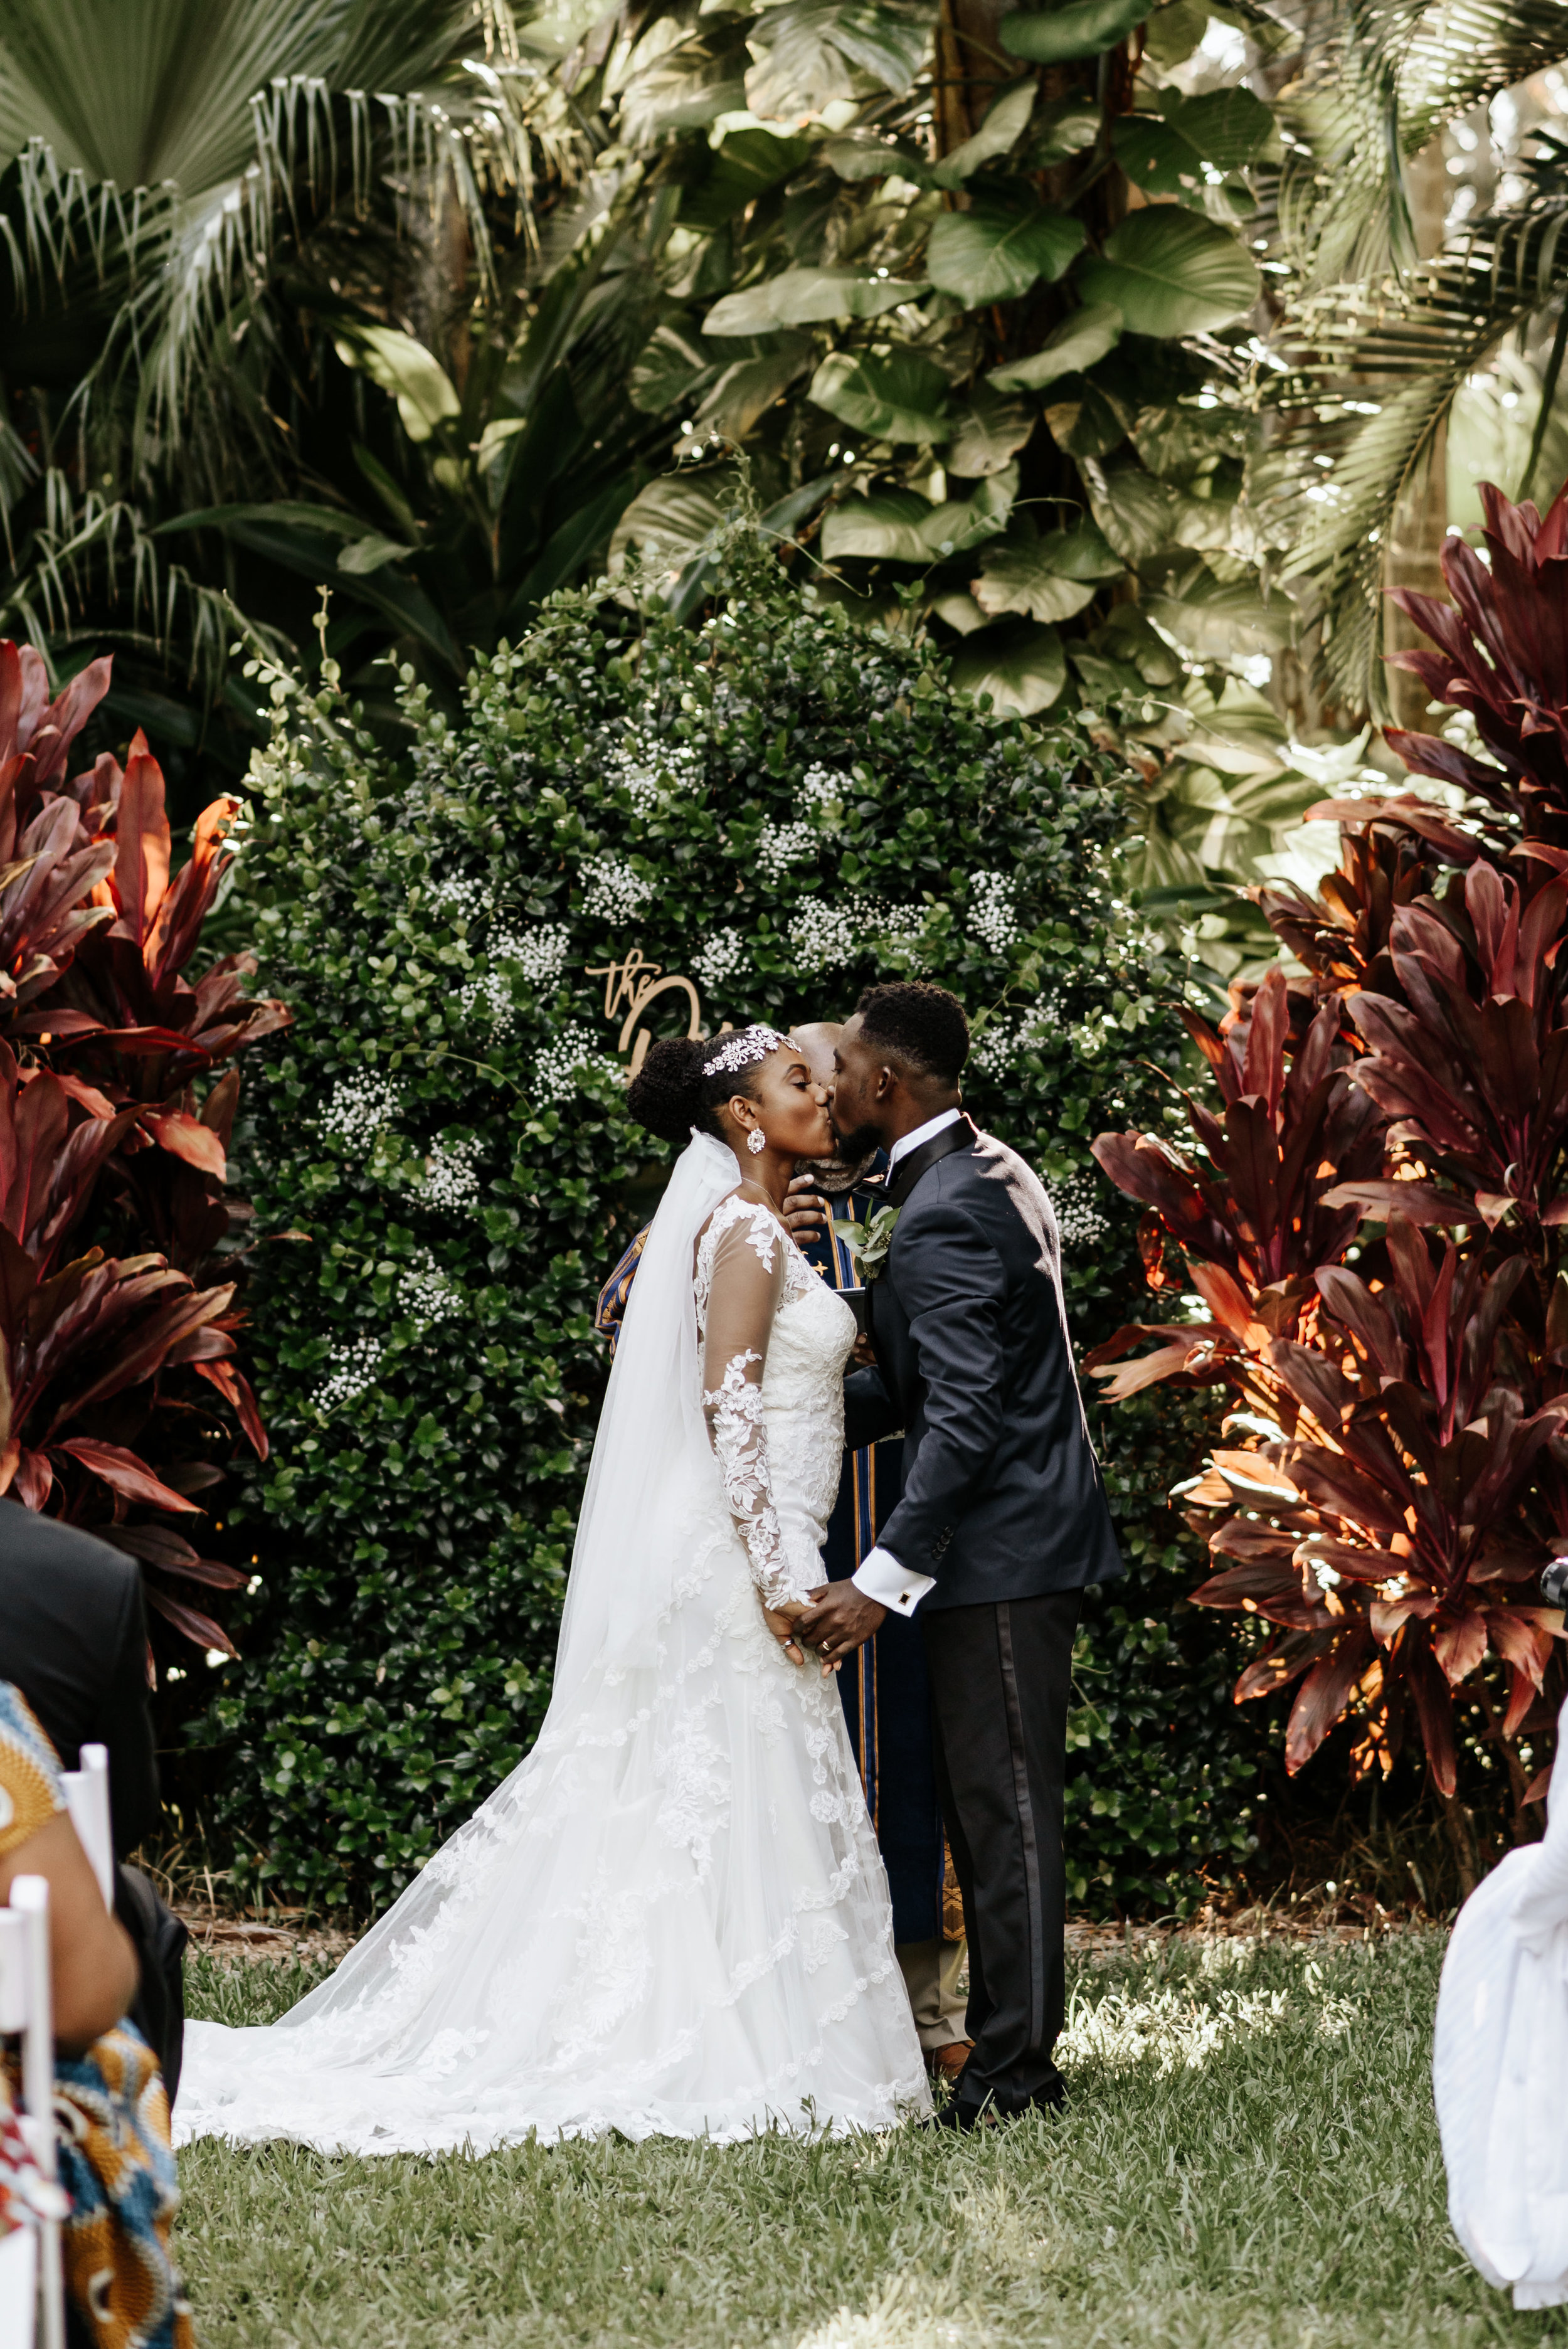 Kristin-Ben-Sunken-Garden-Wedding-Photography-by-V-Previews (55 of 123).jpg